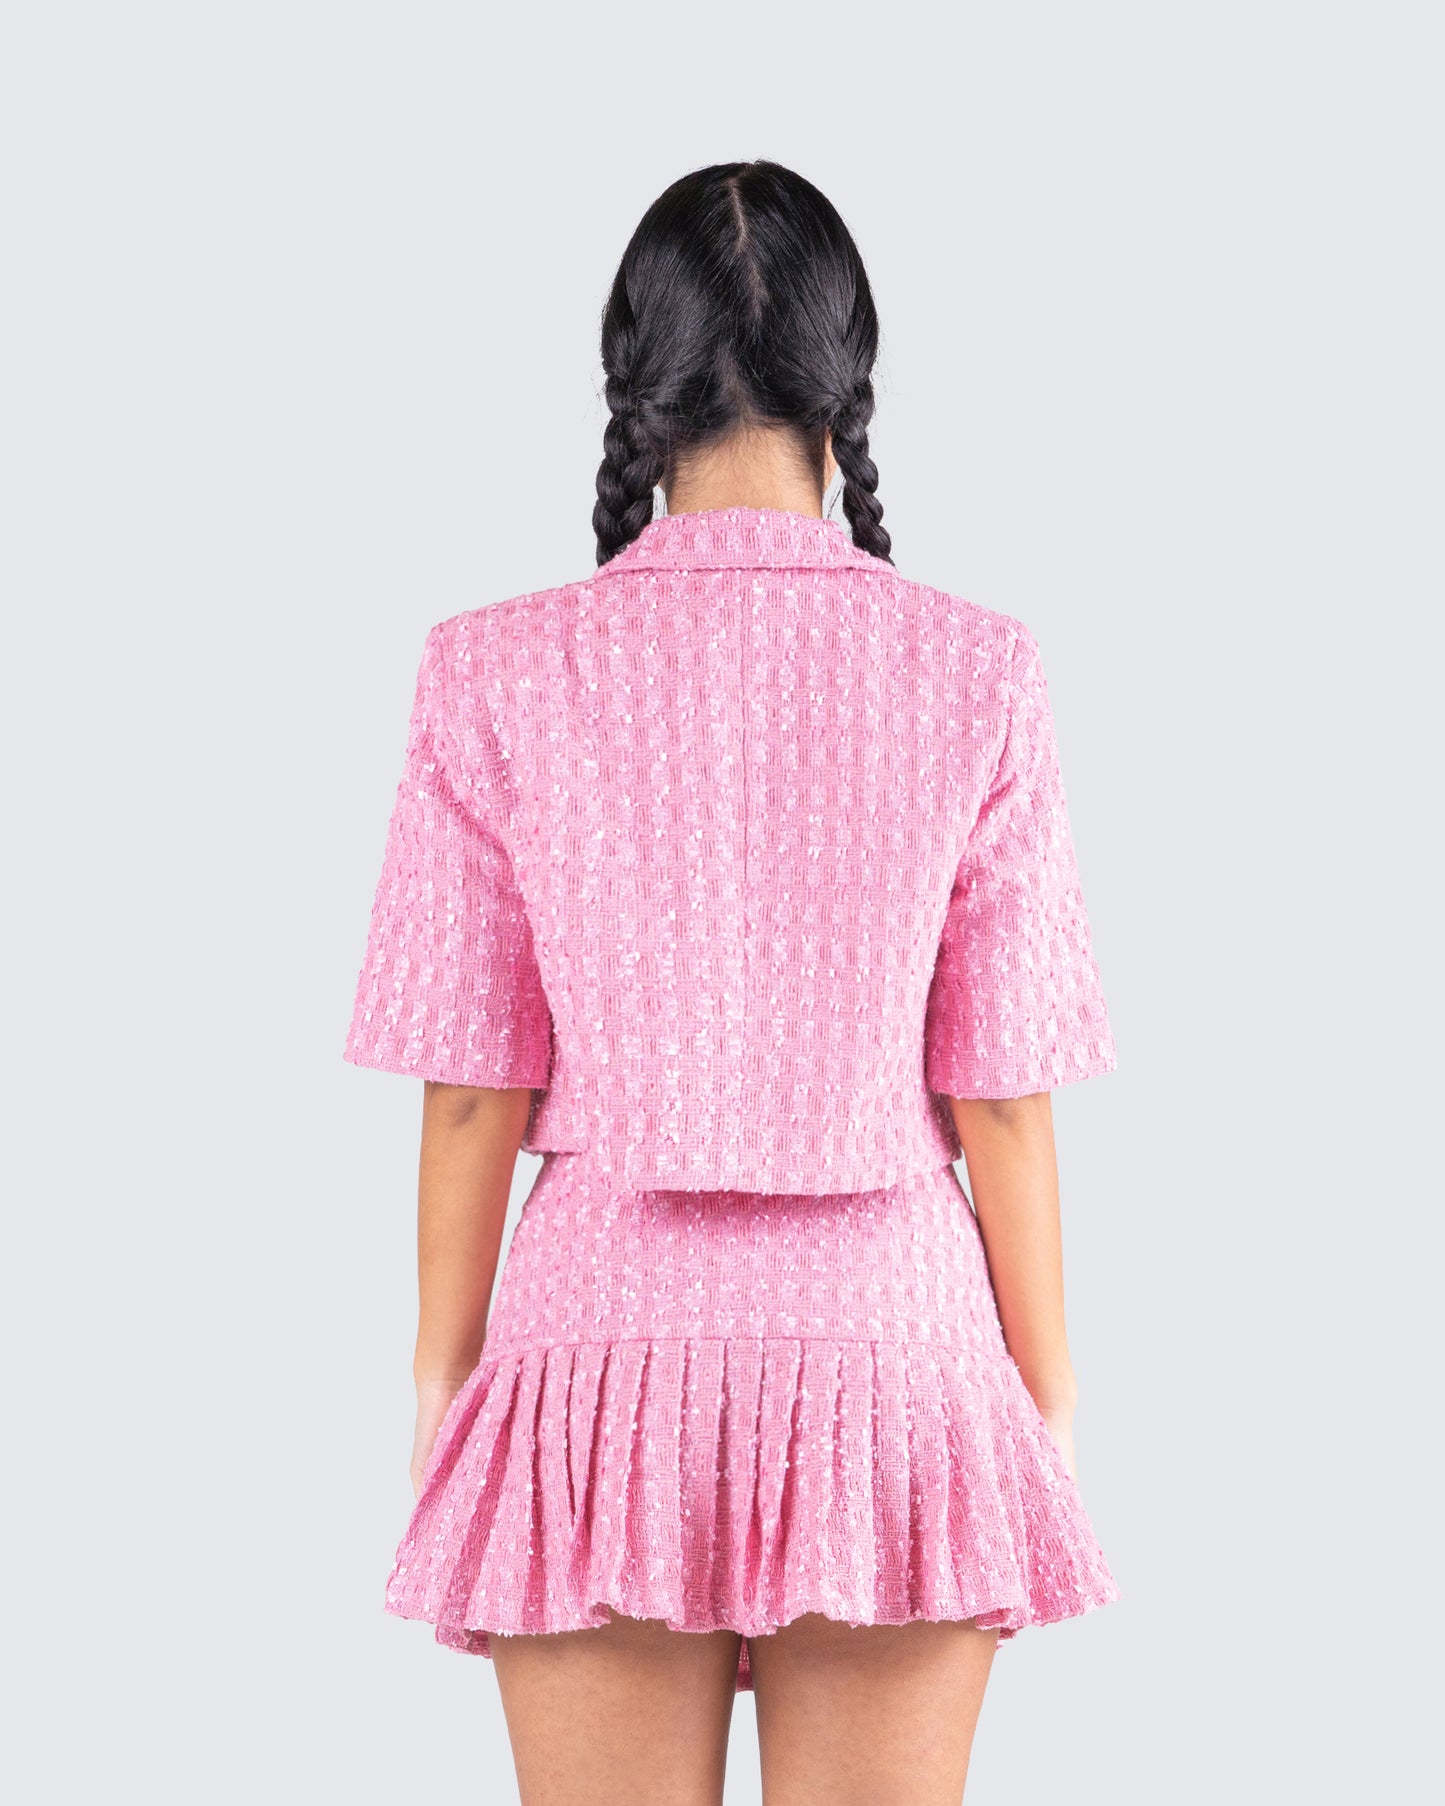 Zola Pink Tweed Jacket